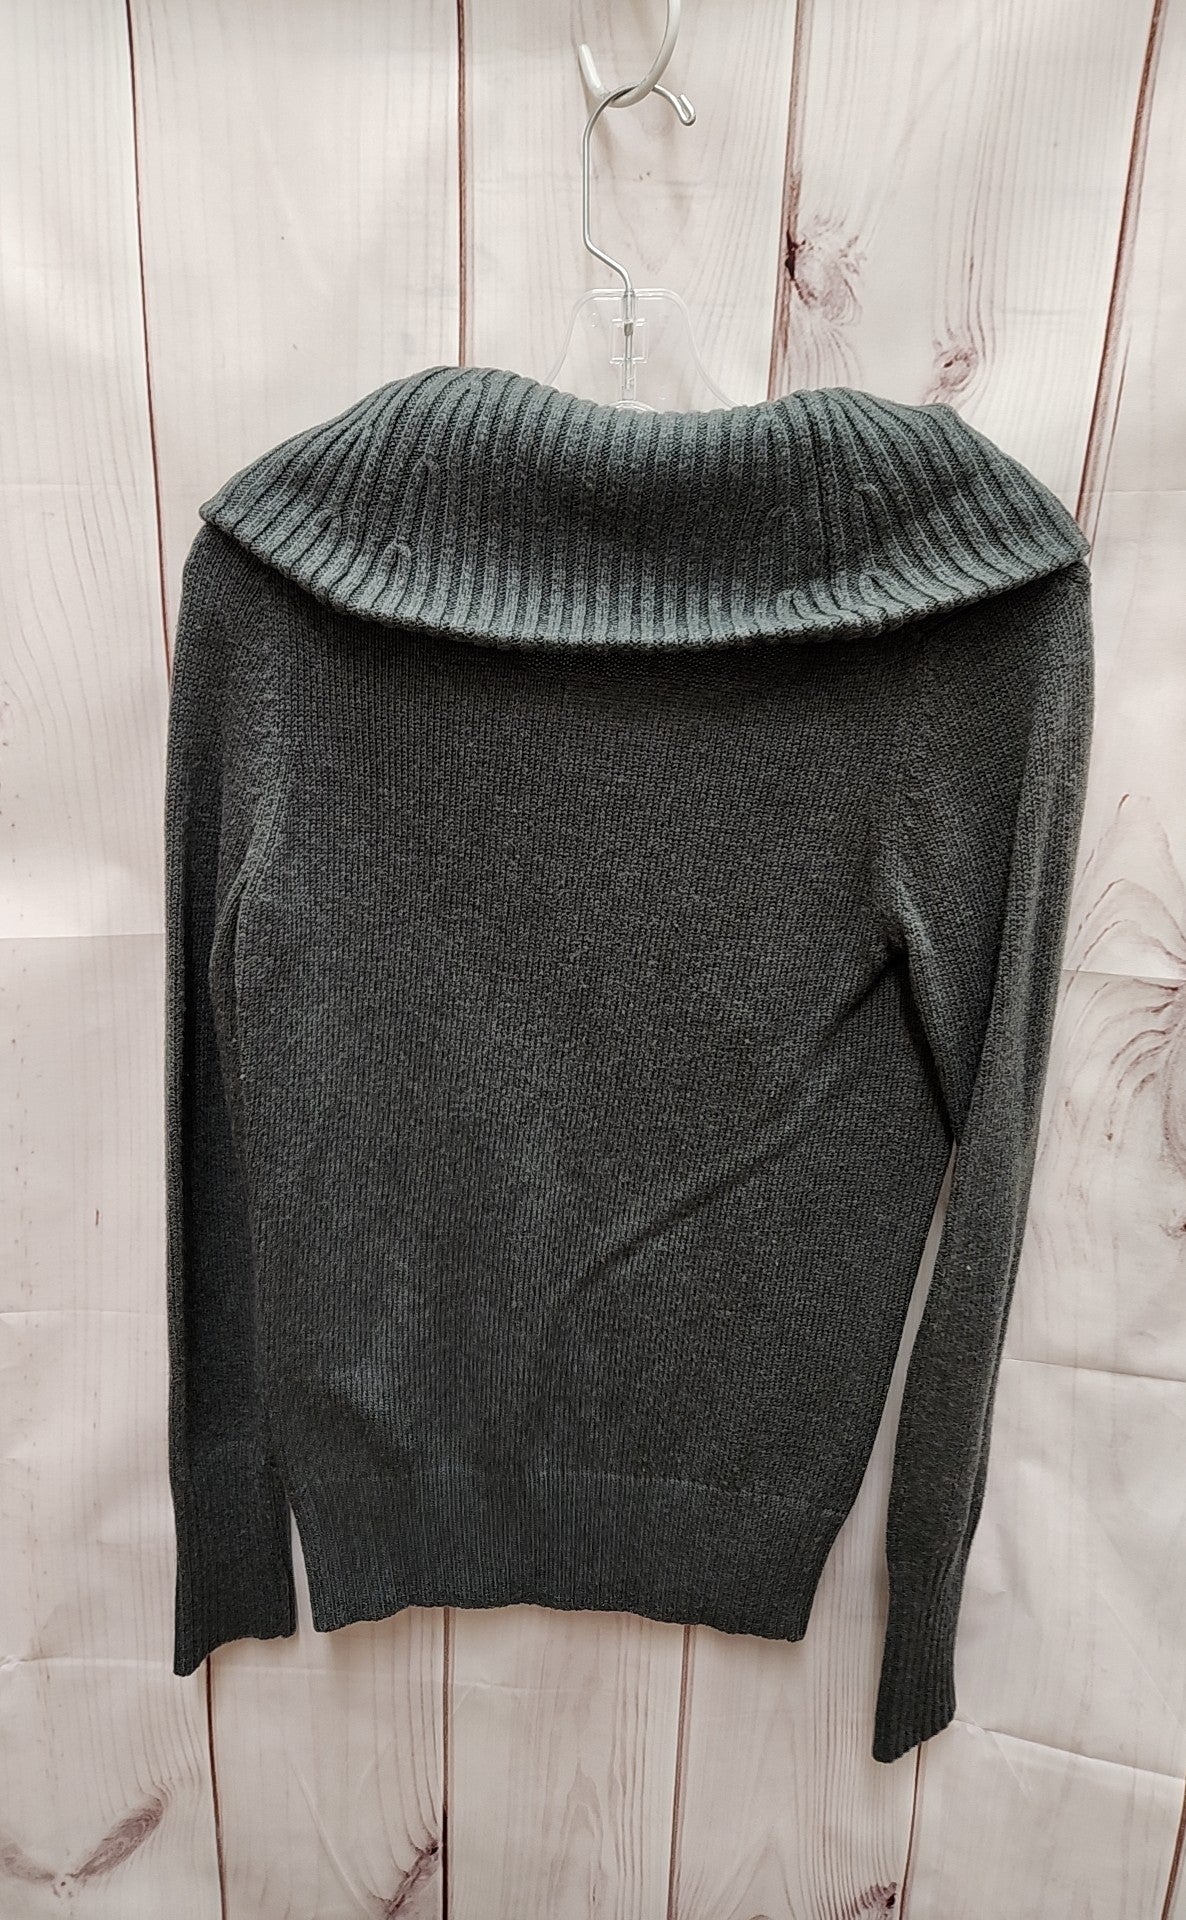 Gap Women's Size S Gray Sweater